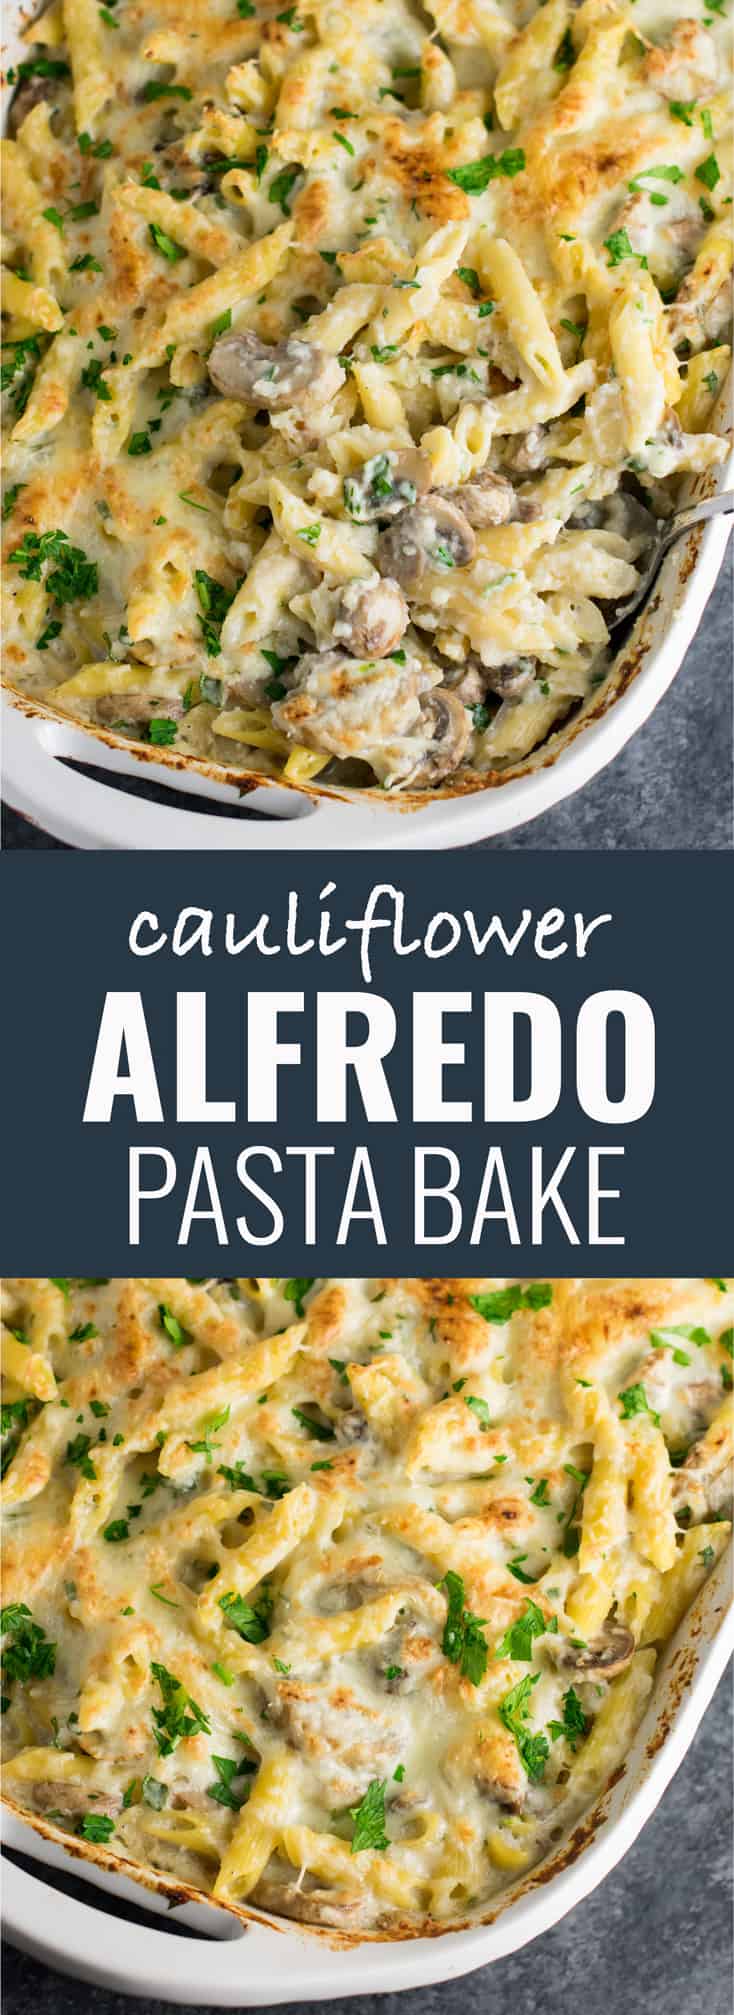 Mushroom cauliflower alfredo pasta bake recipe. A deliciously indulgent pasta bake lightened up with a homemade creamy cauliflower sauce. #caulifloweralfredo #vegetarian #pasta #dinner